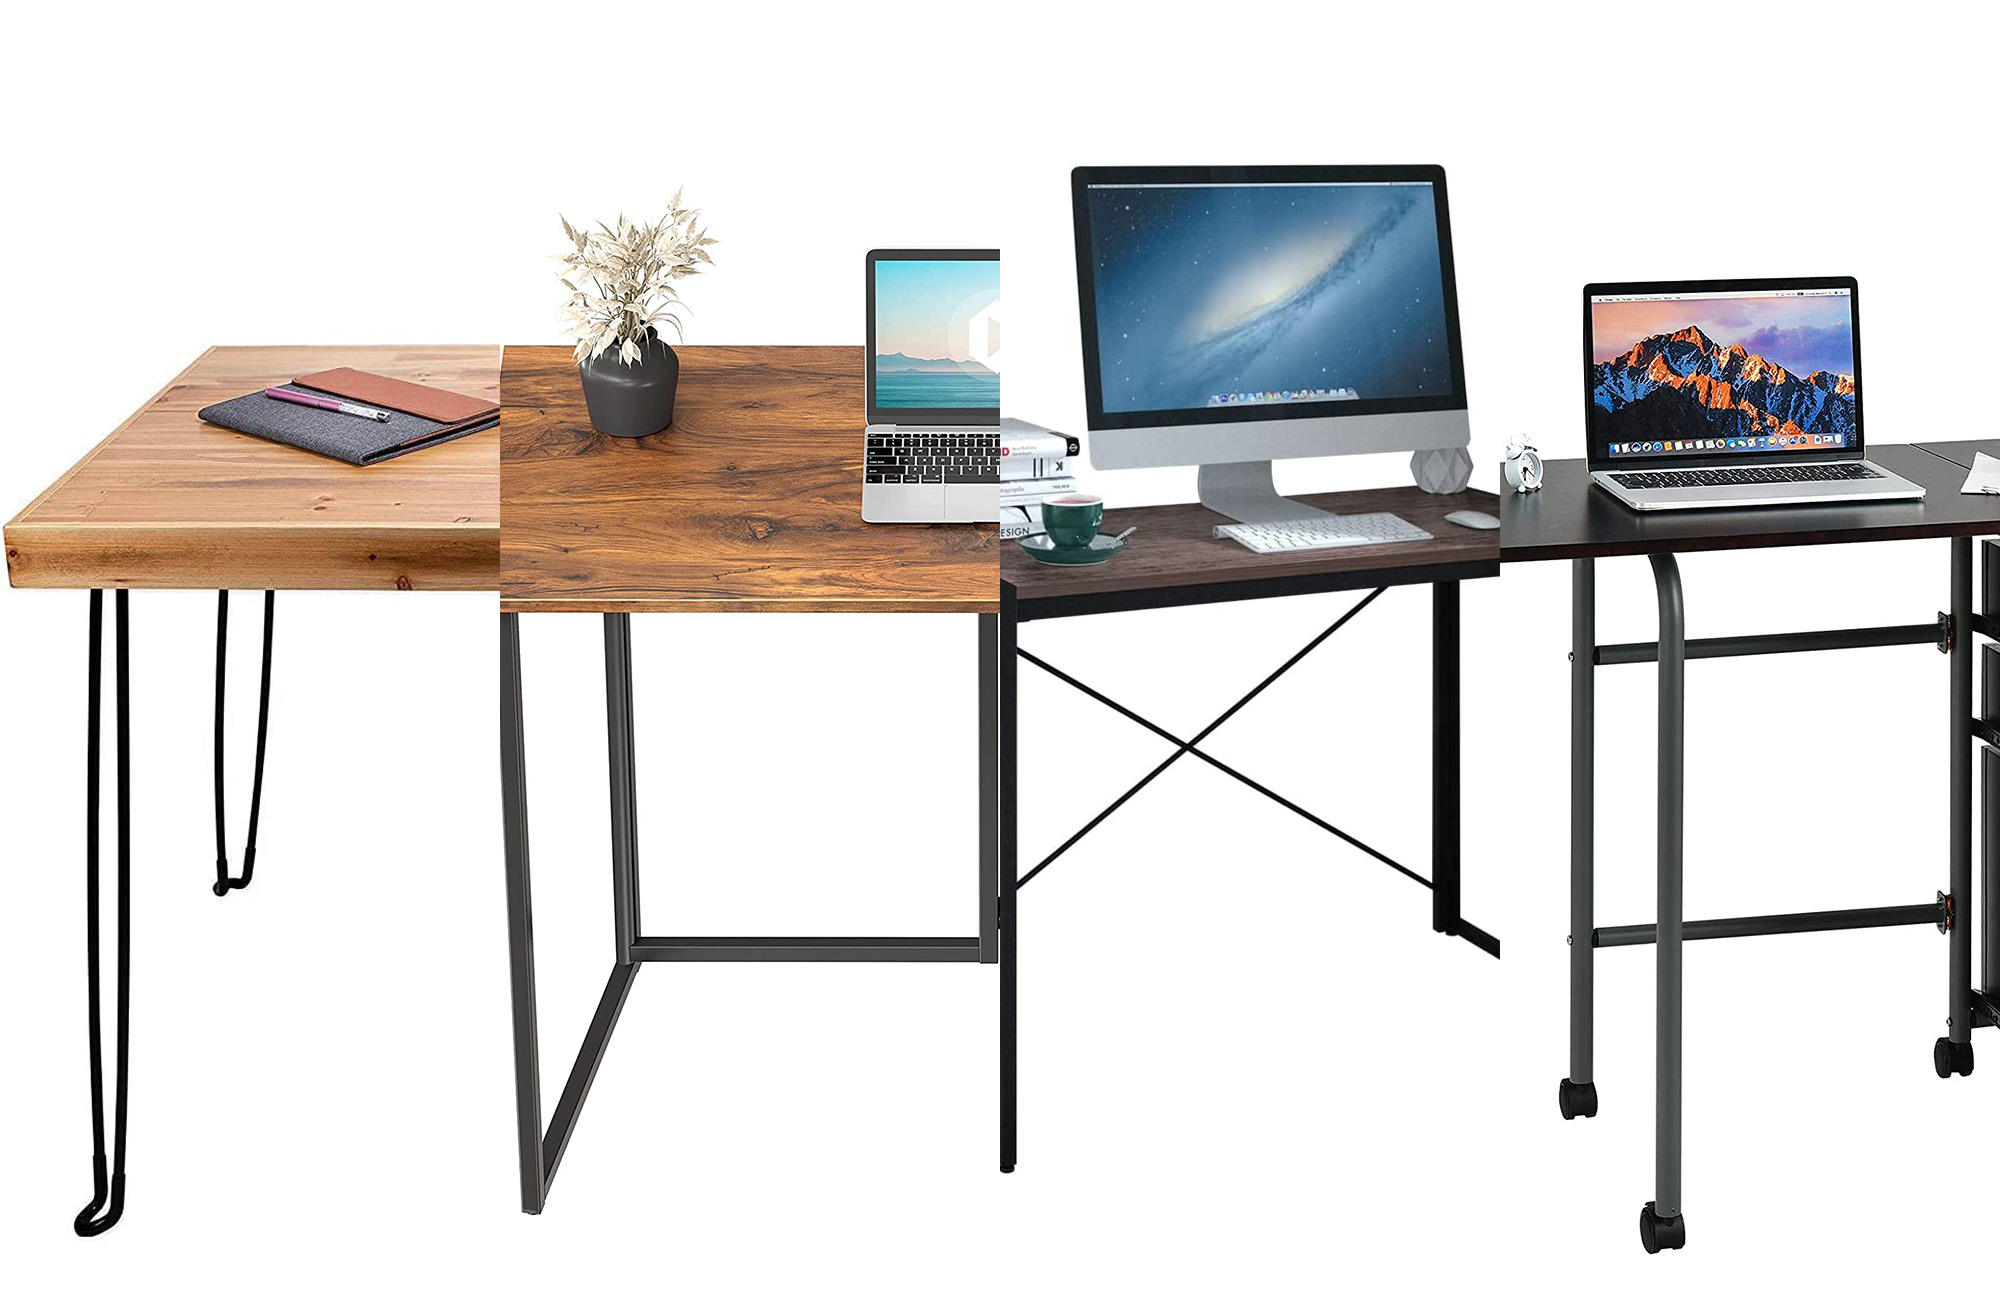 https://www.popsci.com/uploads/2021/07/01/best-folding-desks-header.jpg?auto=webp